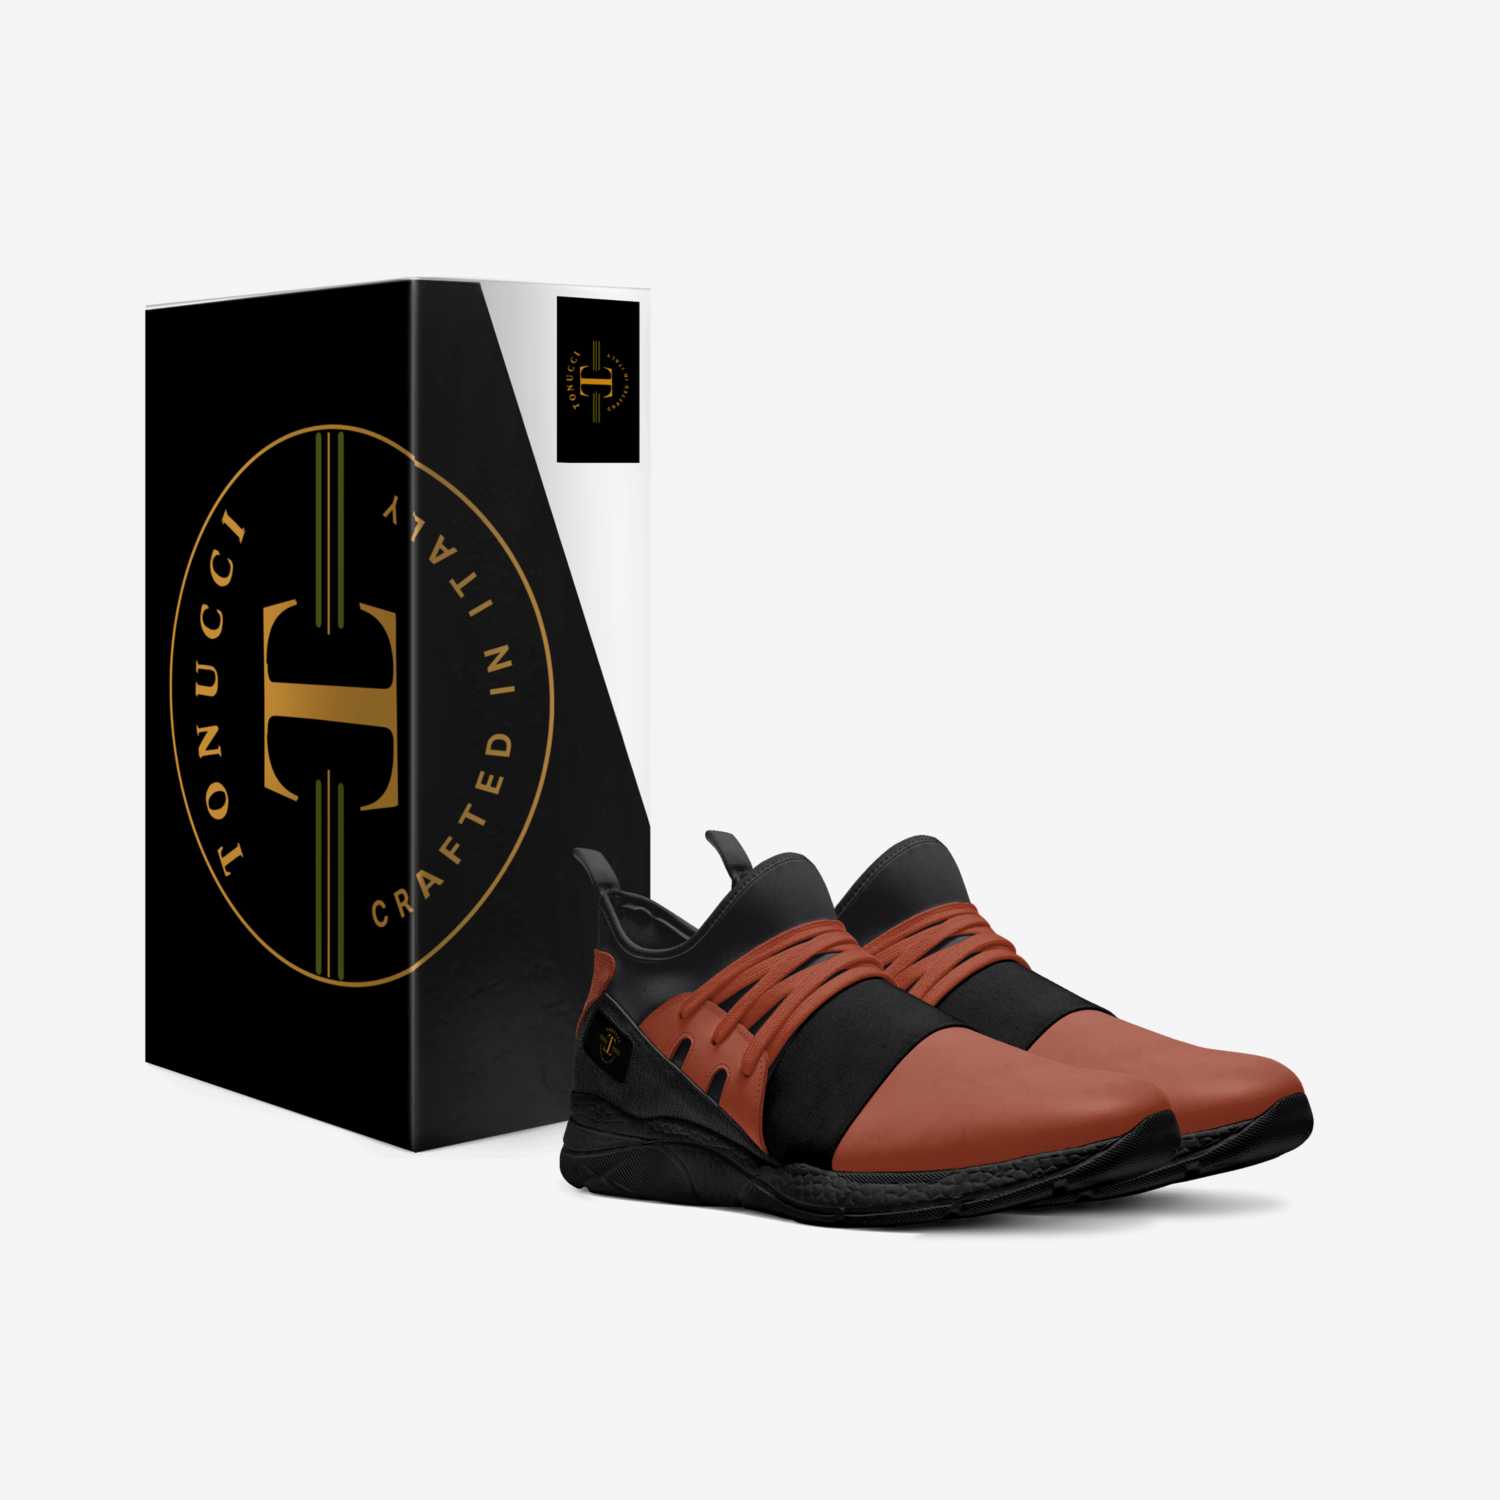 TONUCCI custom made in Italy shoes by La'Tonya Wells Bryson | Box view